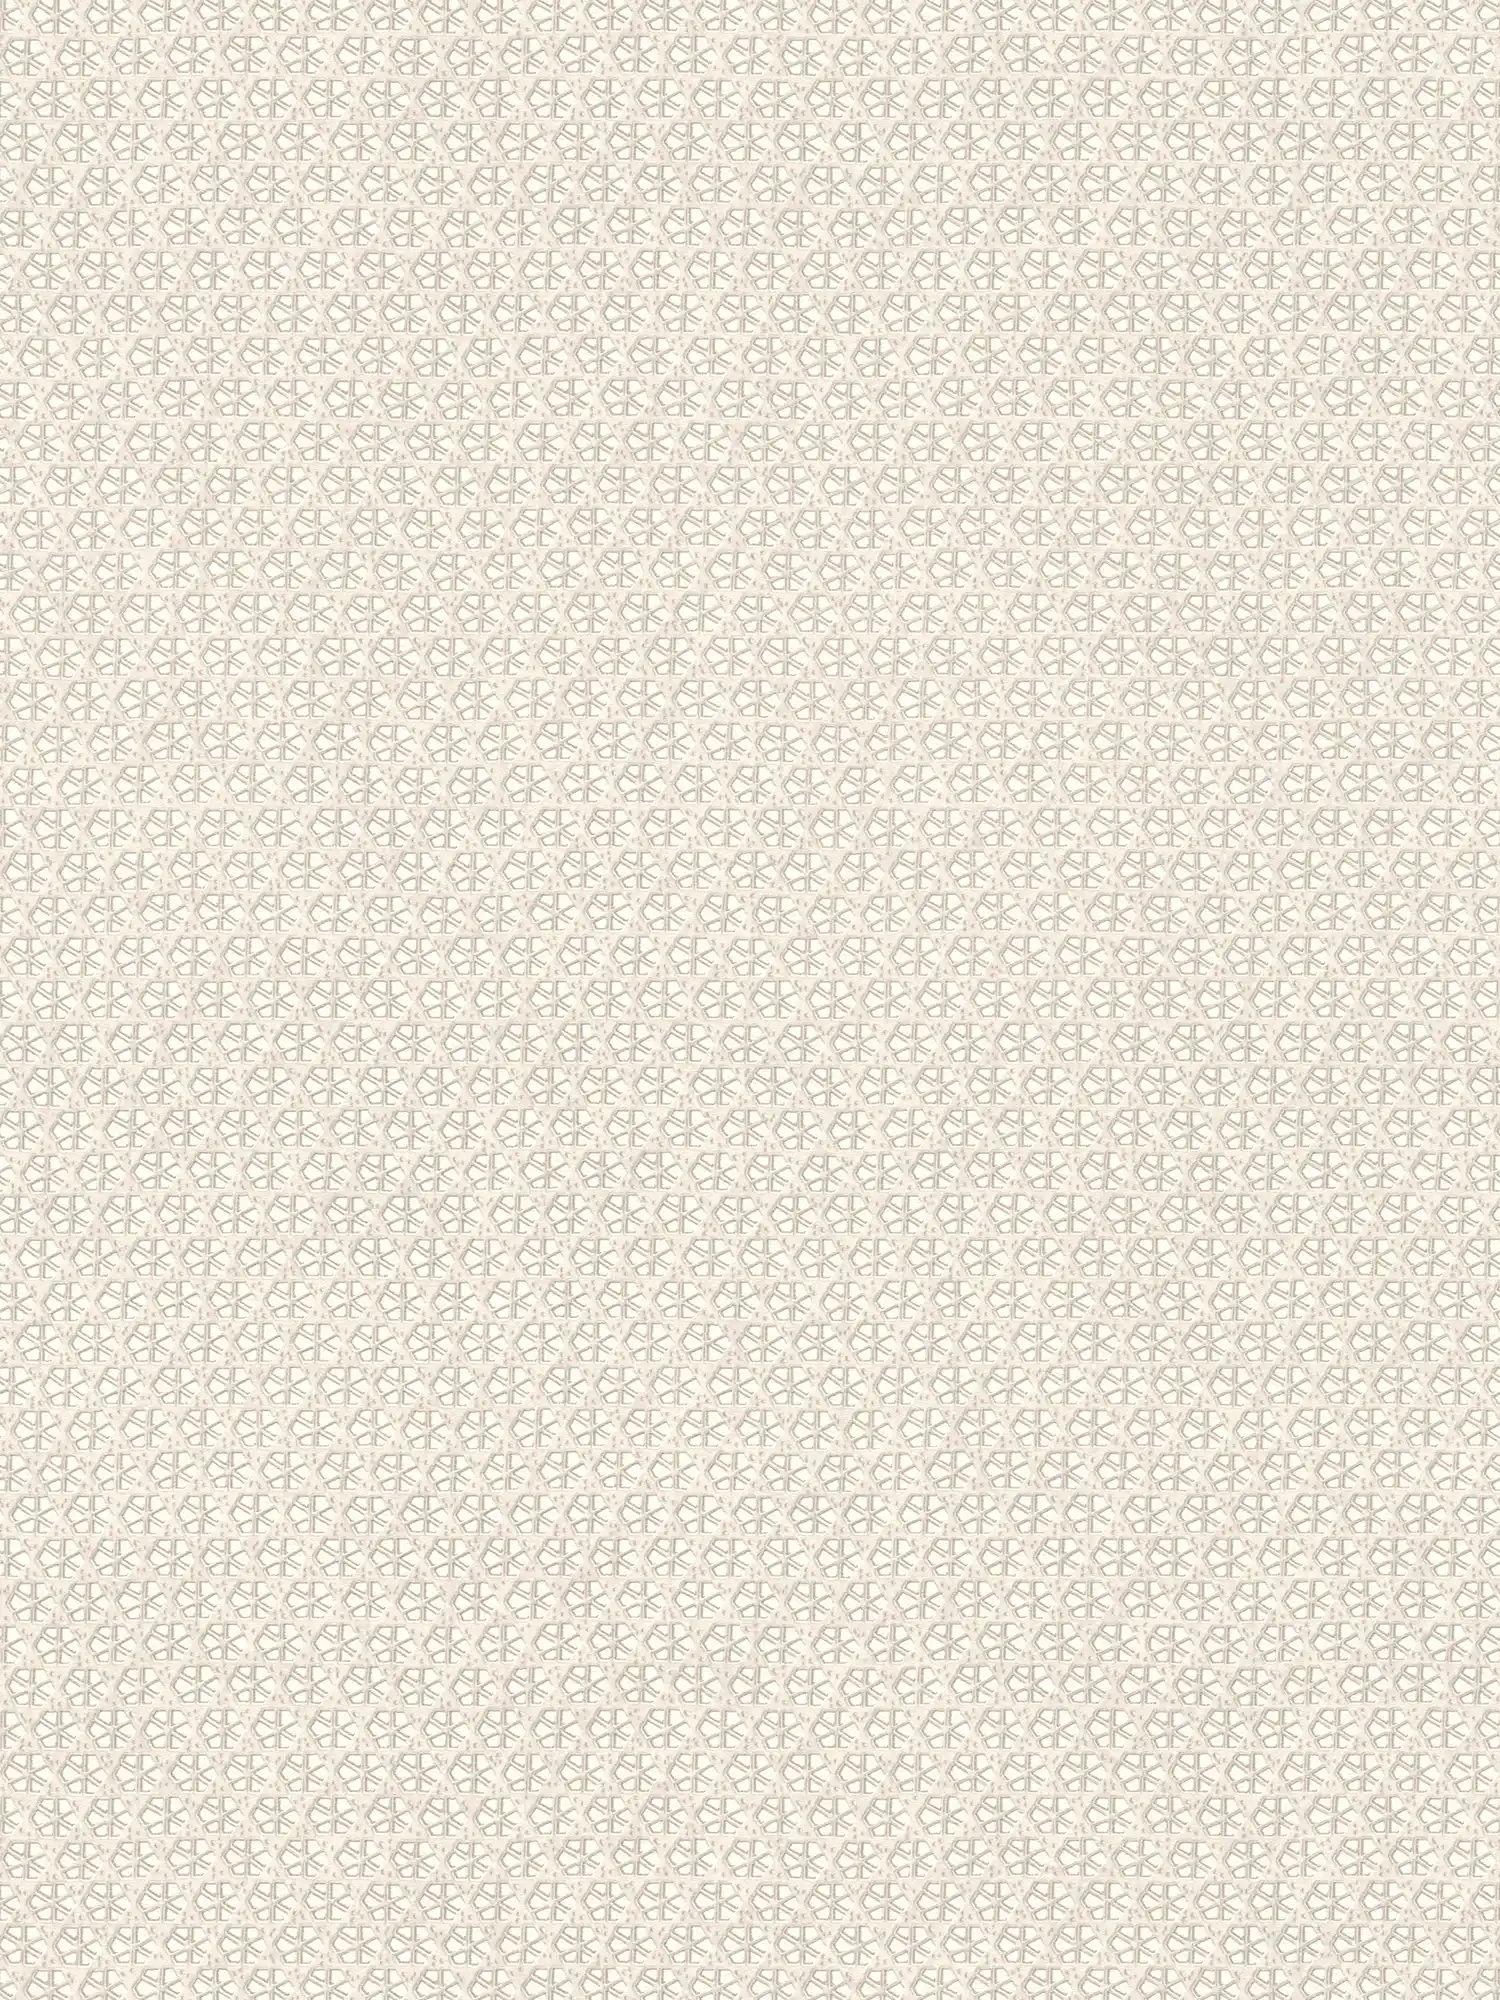 Papier peint Motif rotin style japandi - gris, blanc
